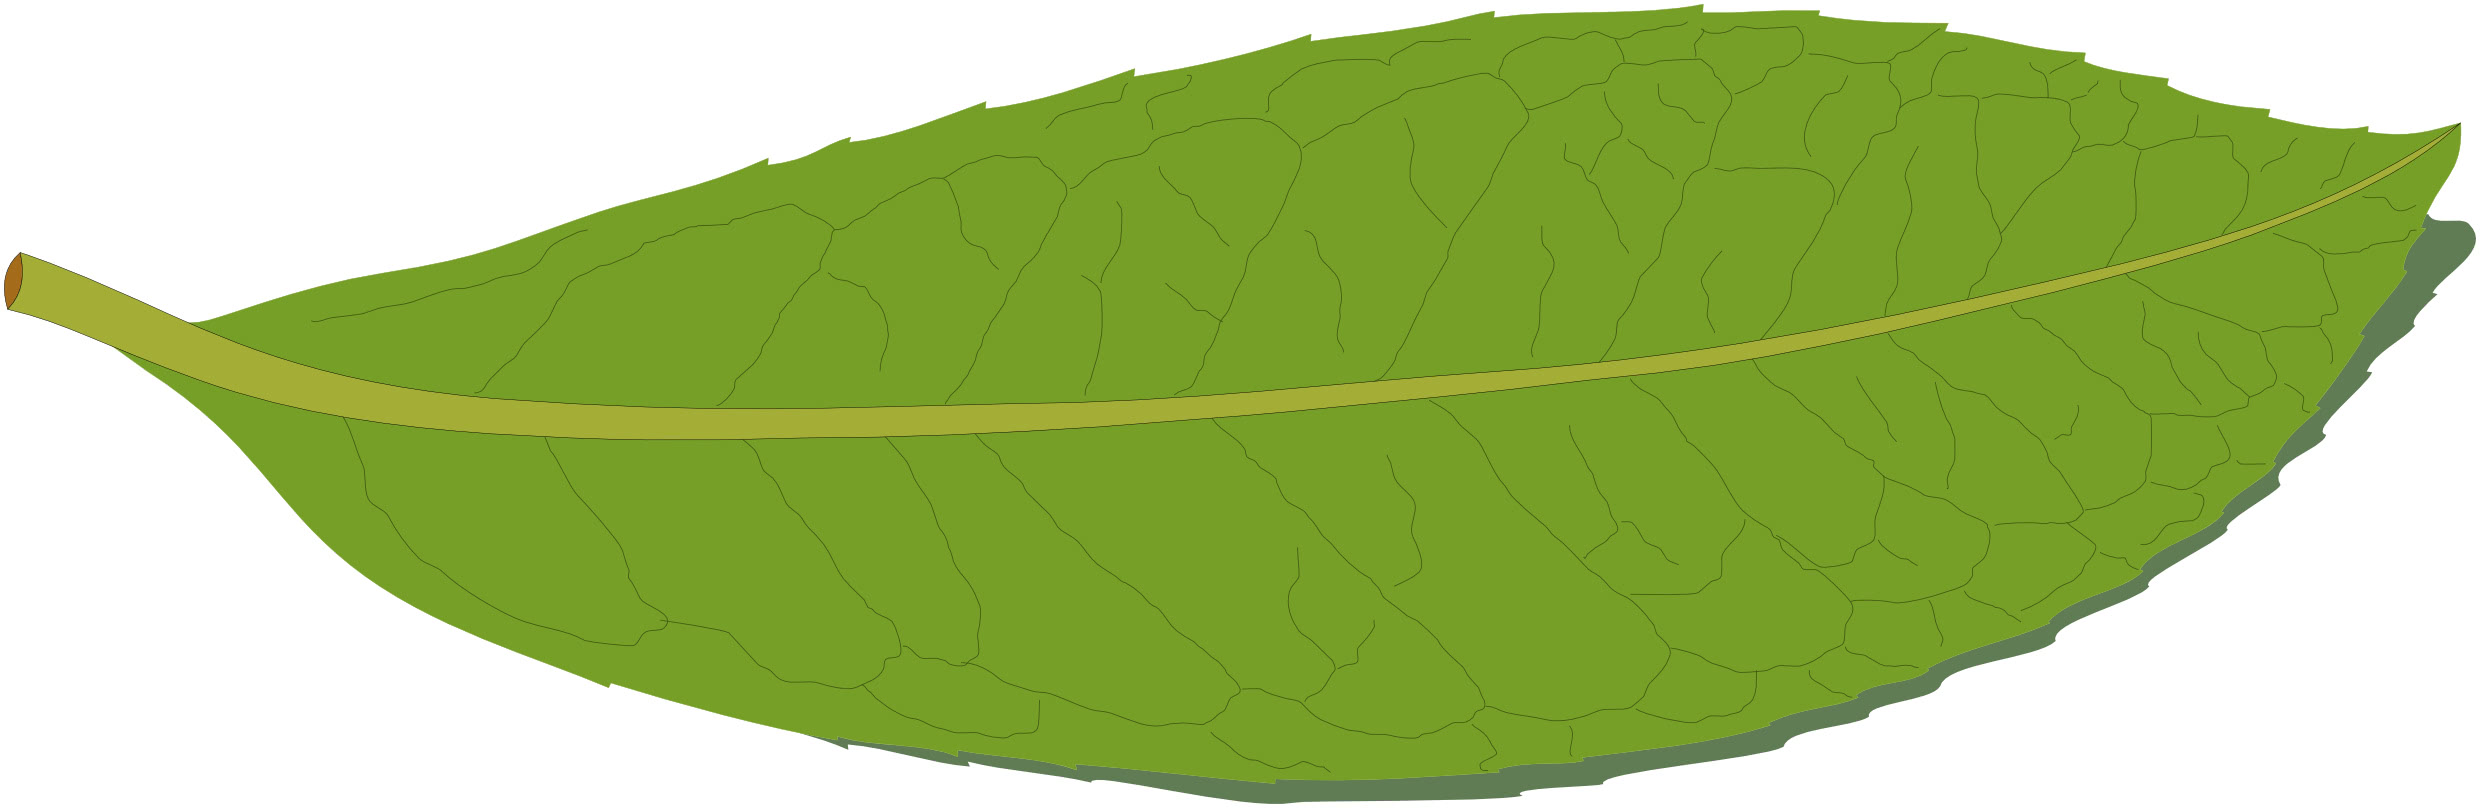 leaf clip art microsoft - photo #41